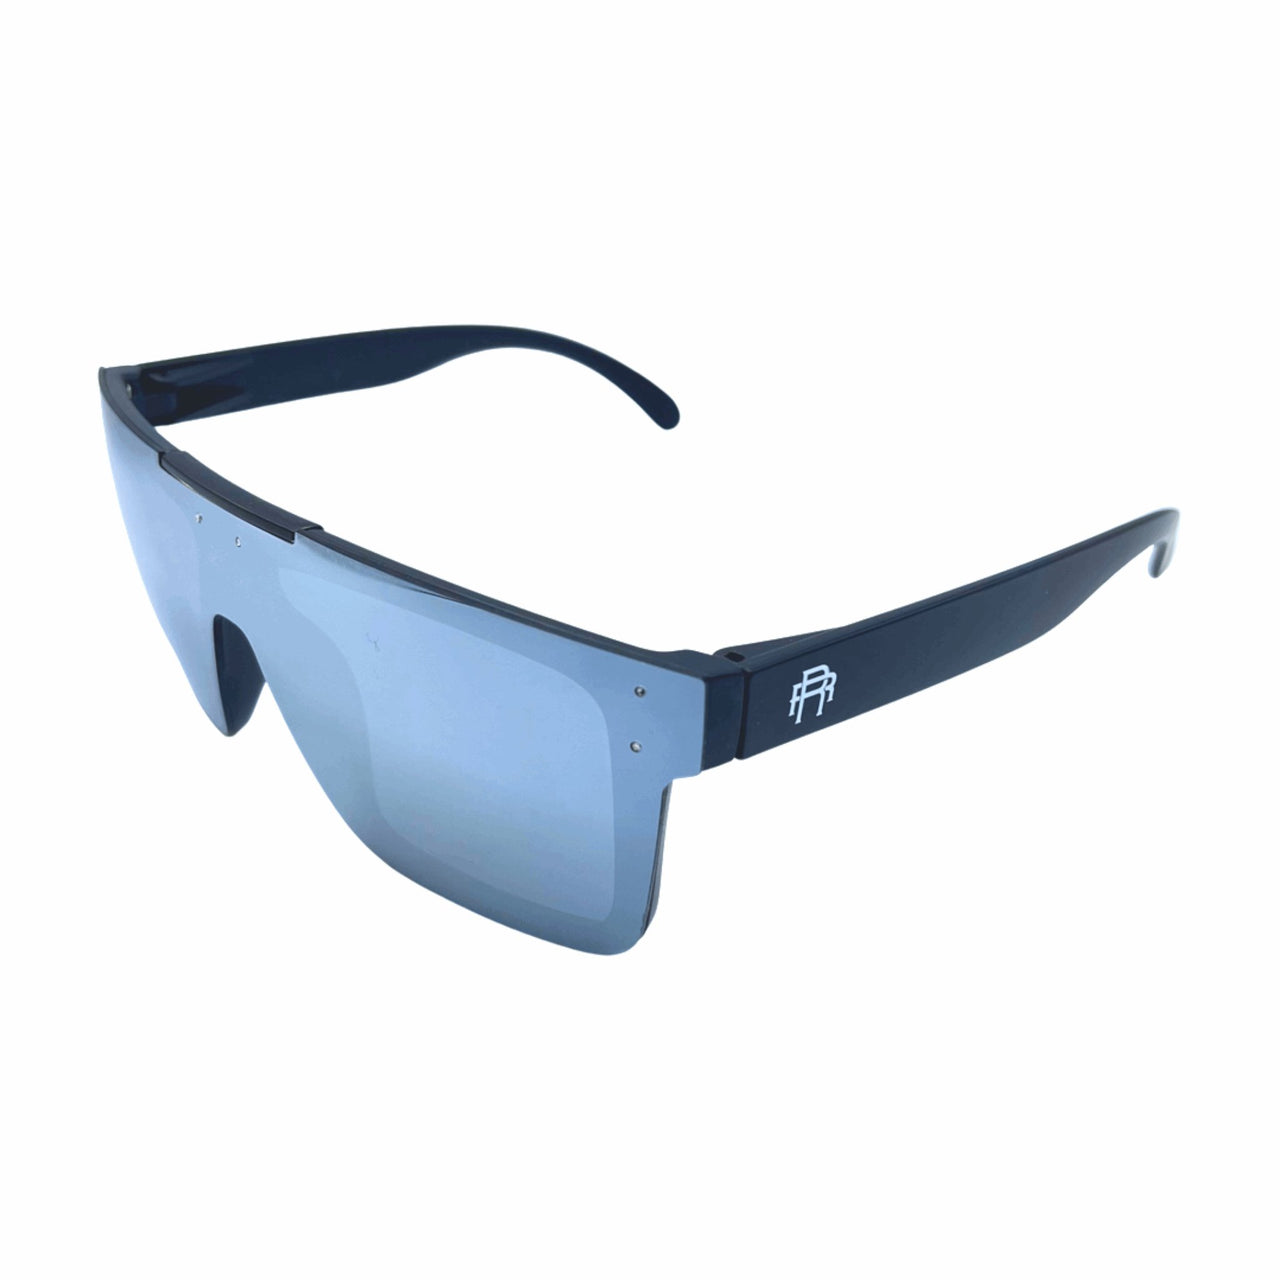 Flair Silver Mirror Polarized Sunglasses - Rebel Reaper Clothing Company Sunglasses